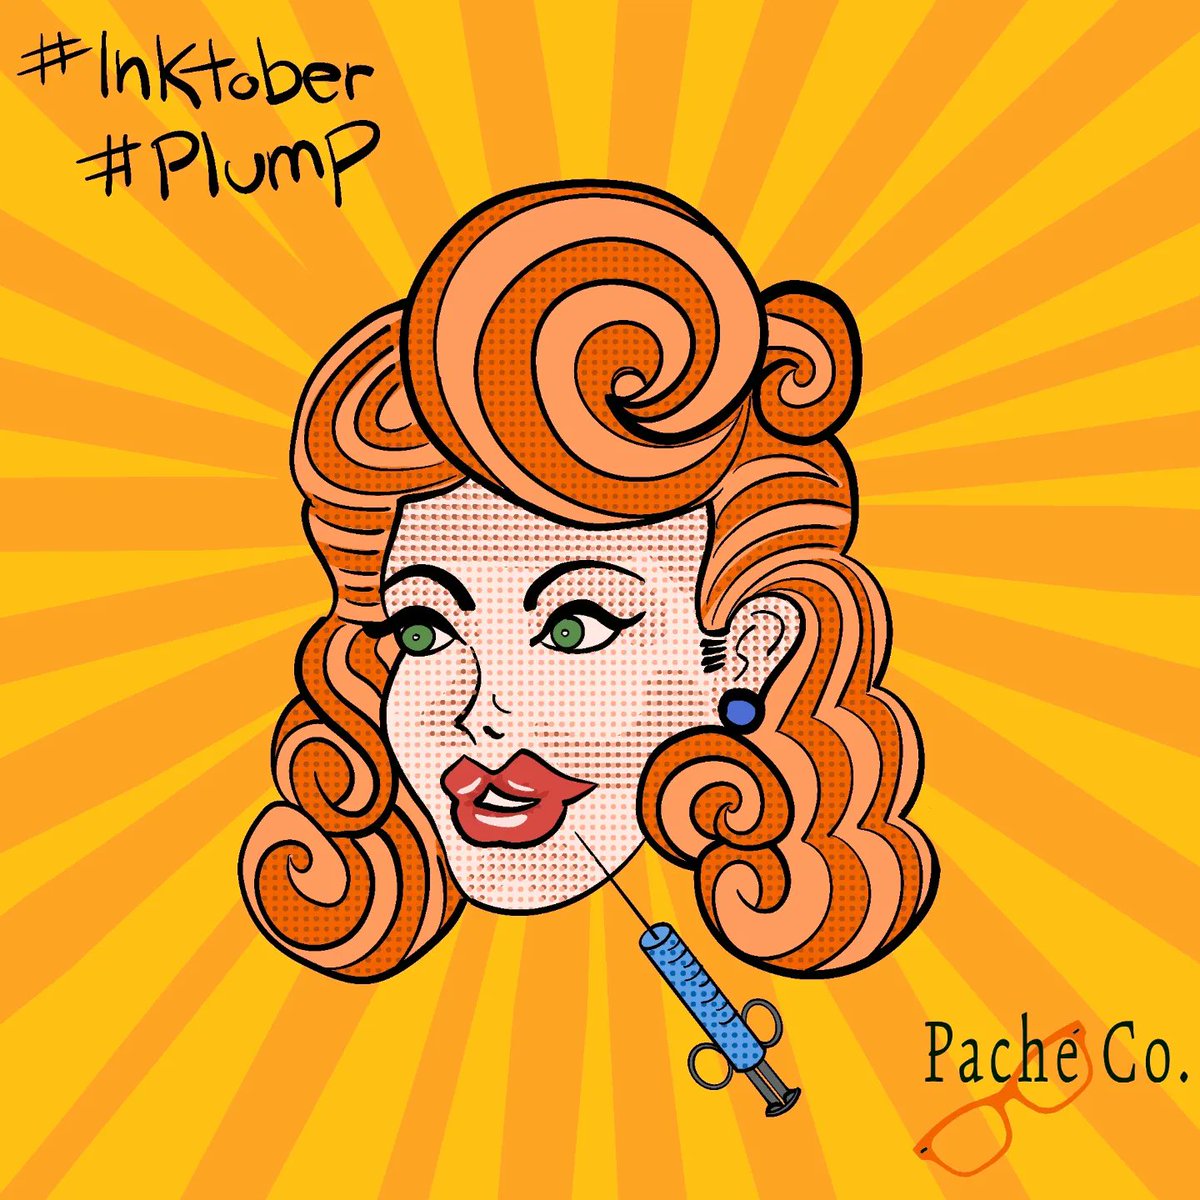 #Inktober2023 Day 19: #Plump

LA plump

#RadArt #RadArtober #Inktober #PopArt #botox #LAwoman